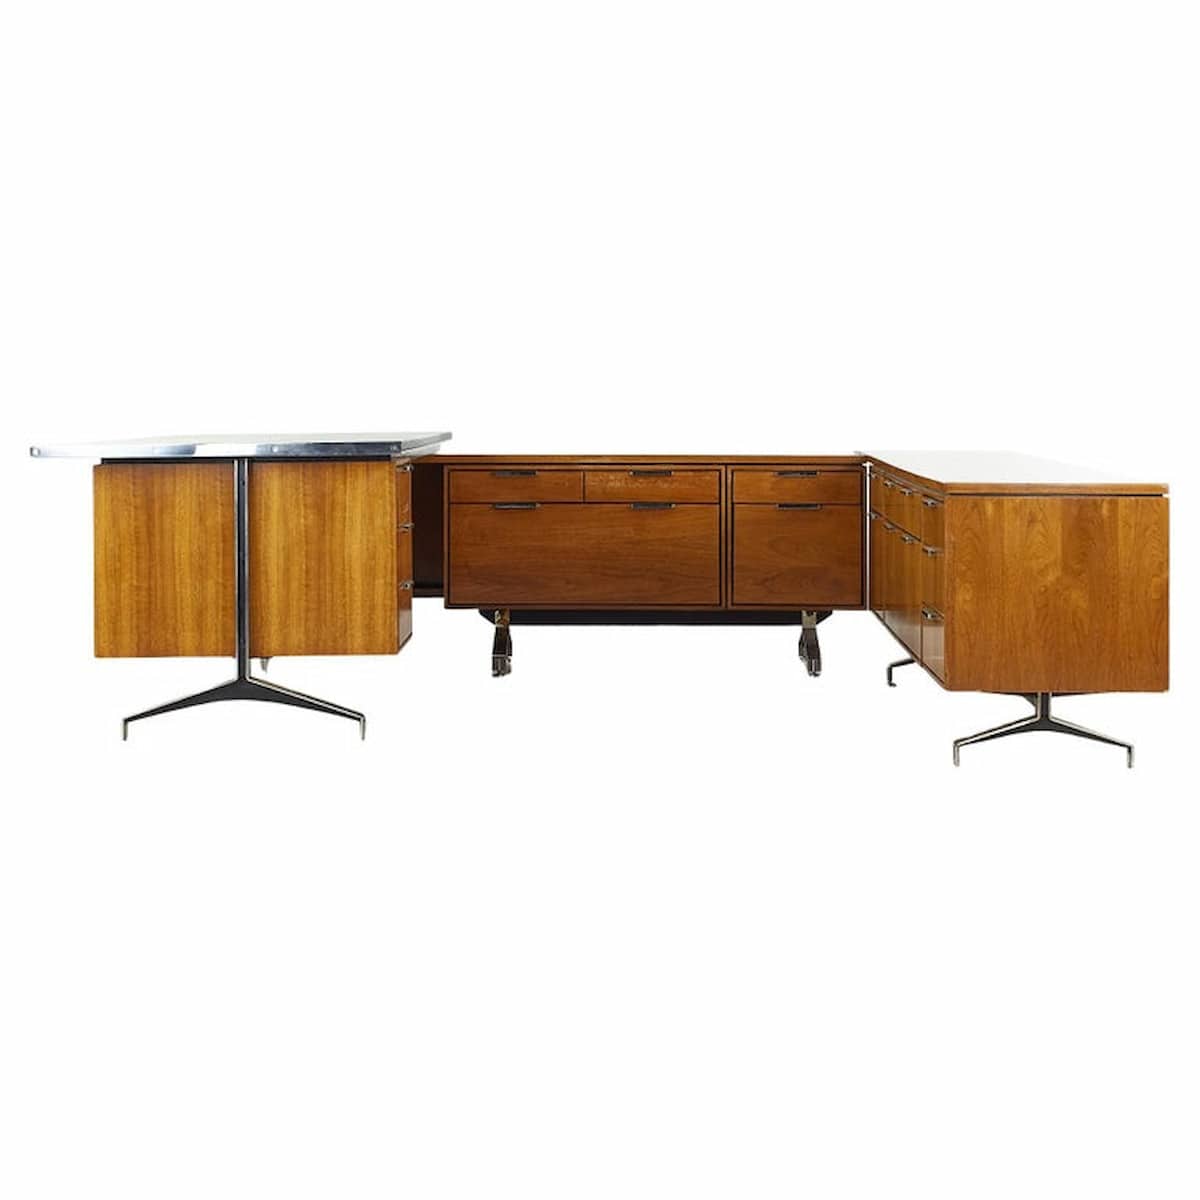 Imperial Desk Company Mid Century Walnut U-shaped Desk with Chrome Handles